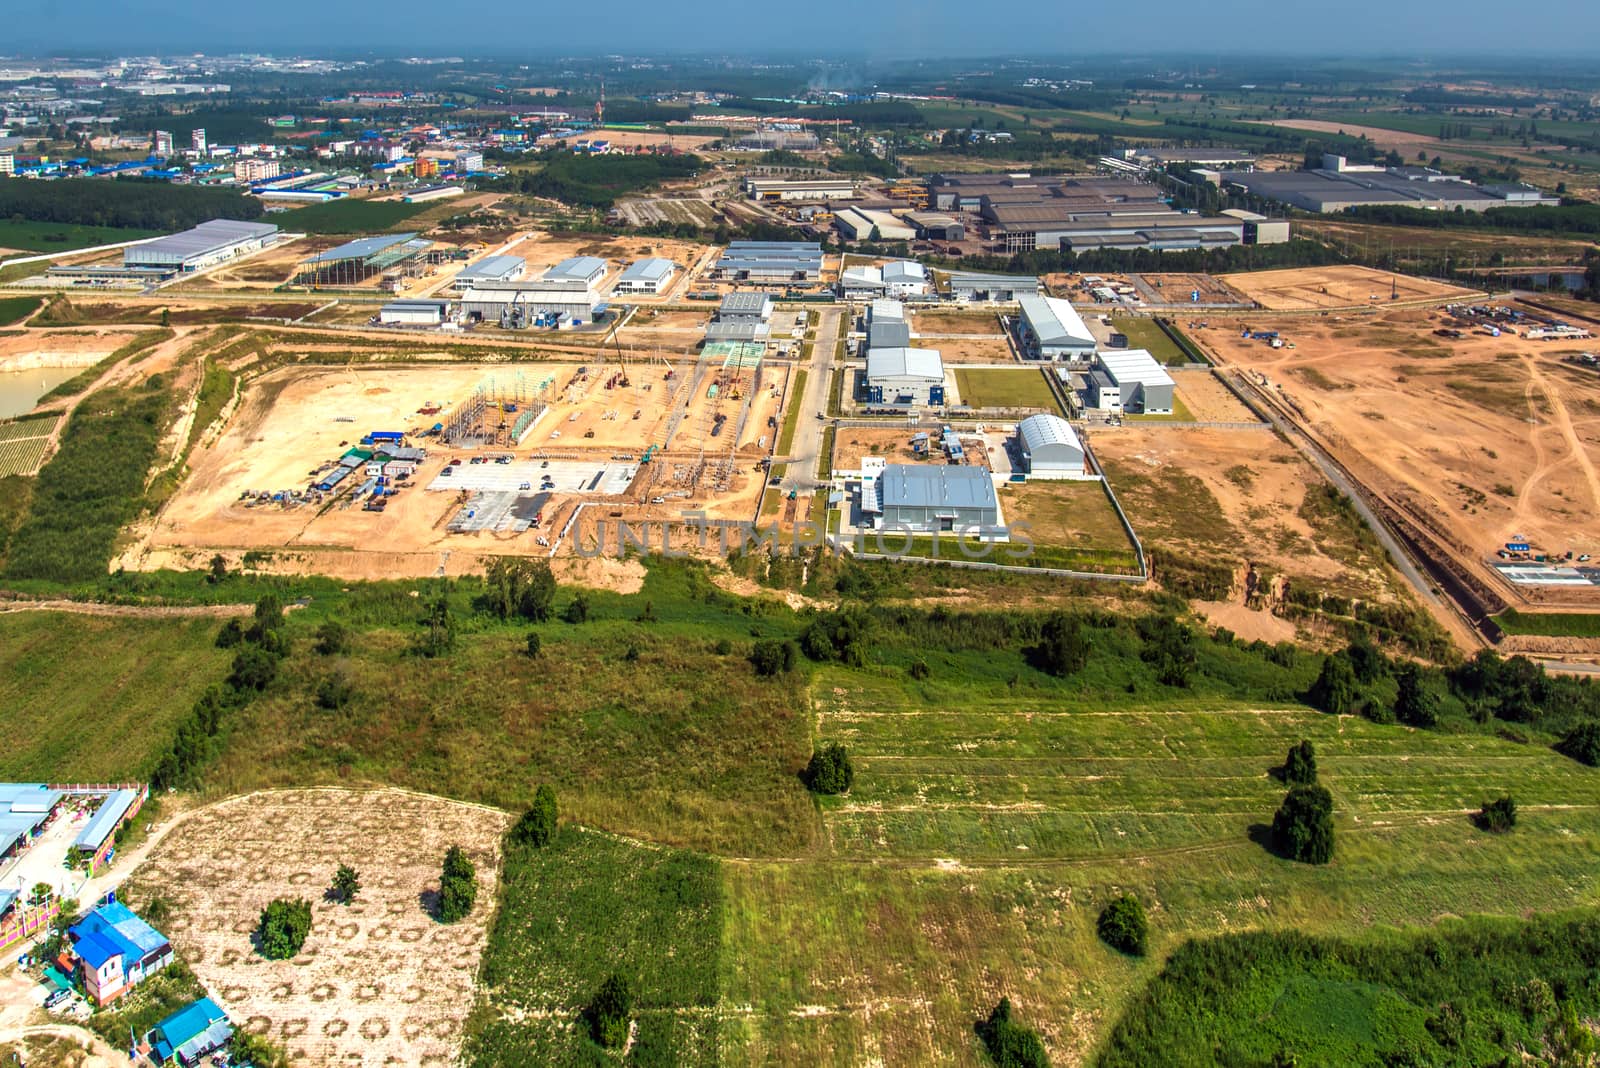 Land Development Industrial Estate Construction Structure Growth